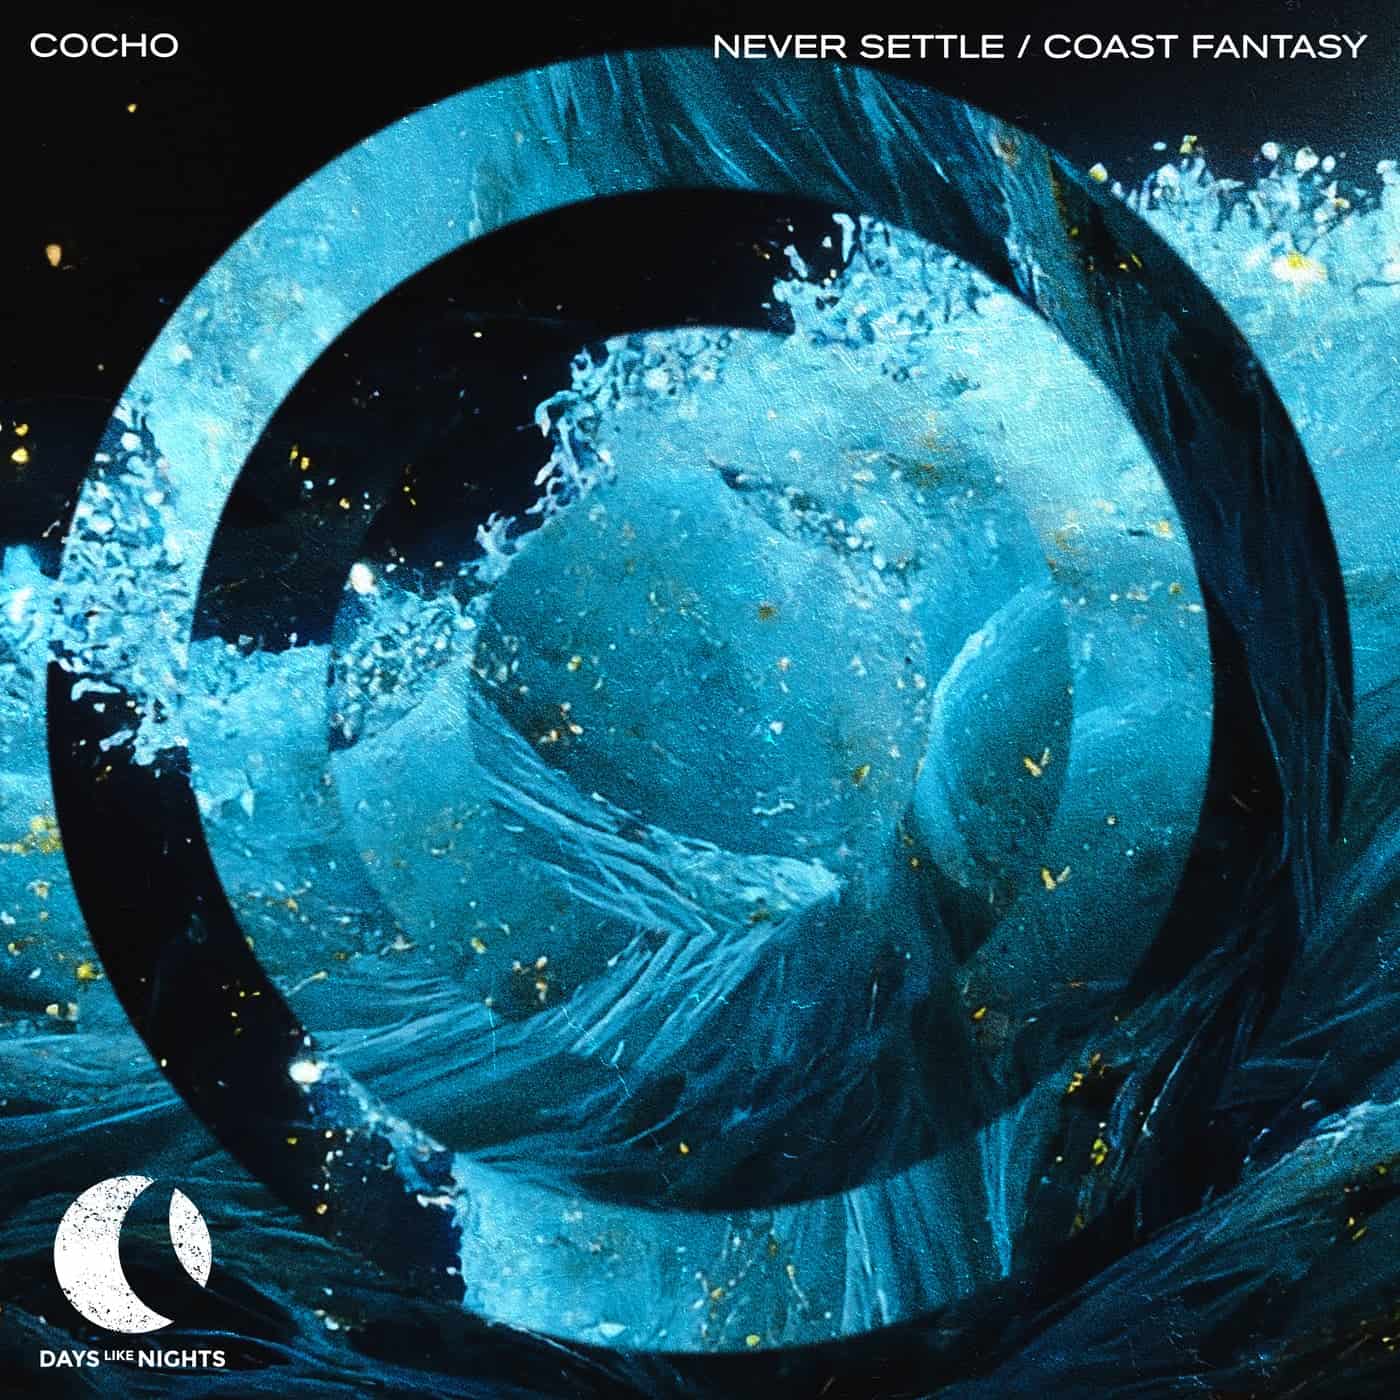 image cover: Cocho - Never Settle / Coast Fantasy / DLN052